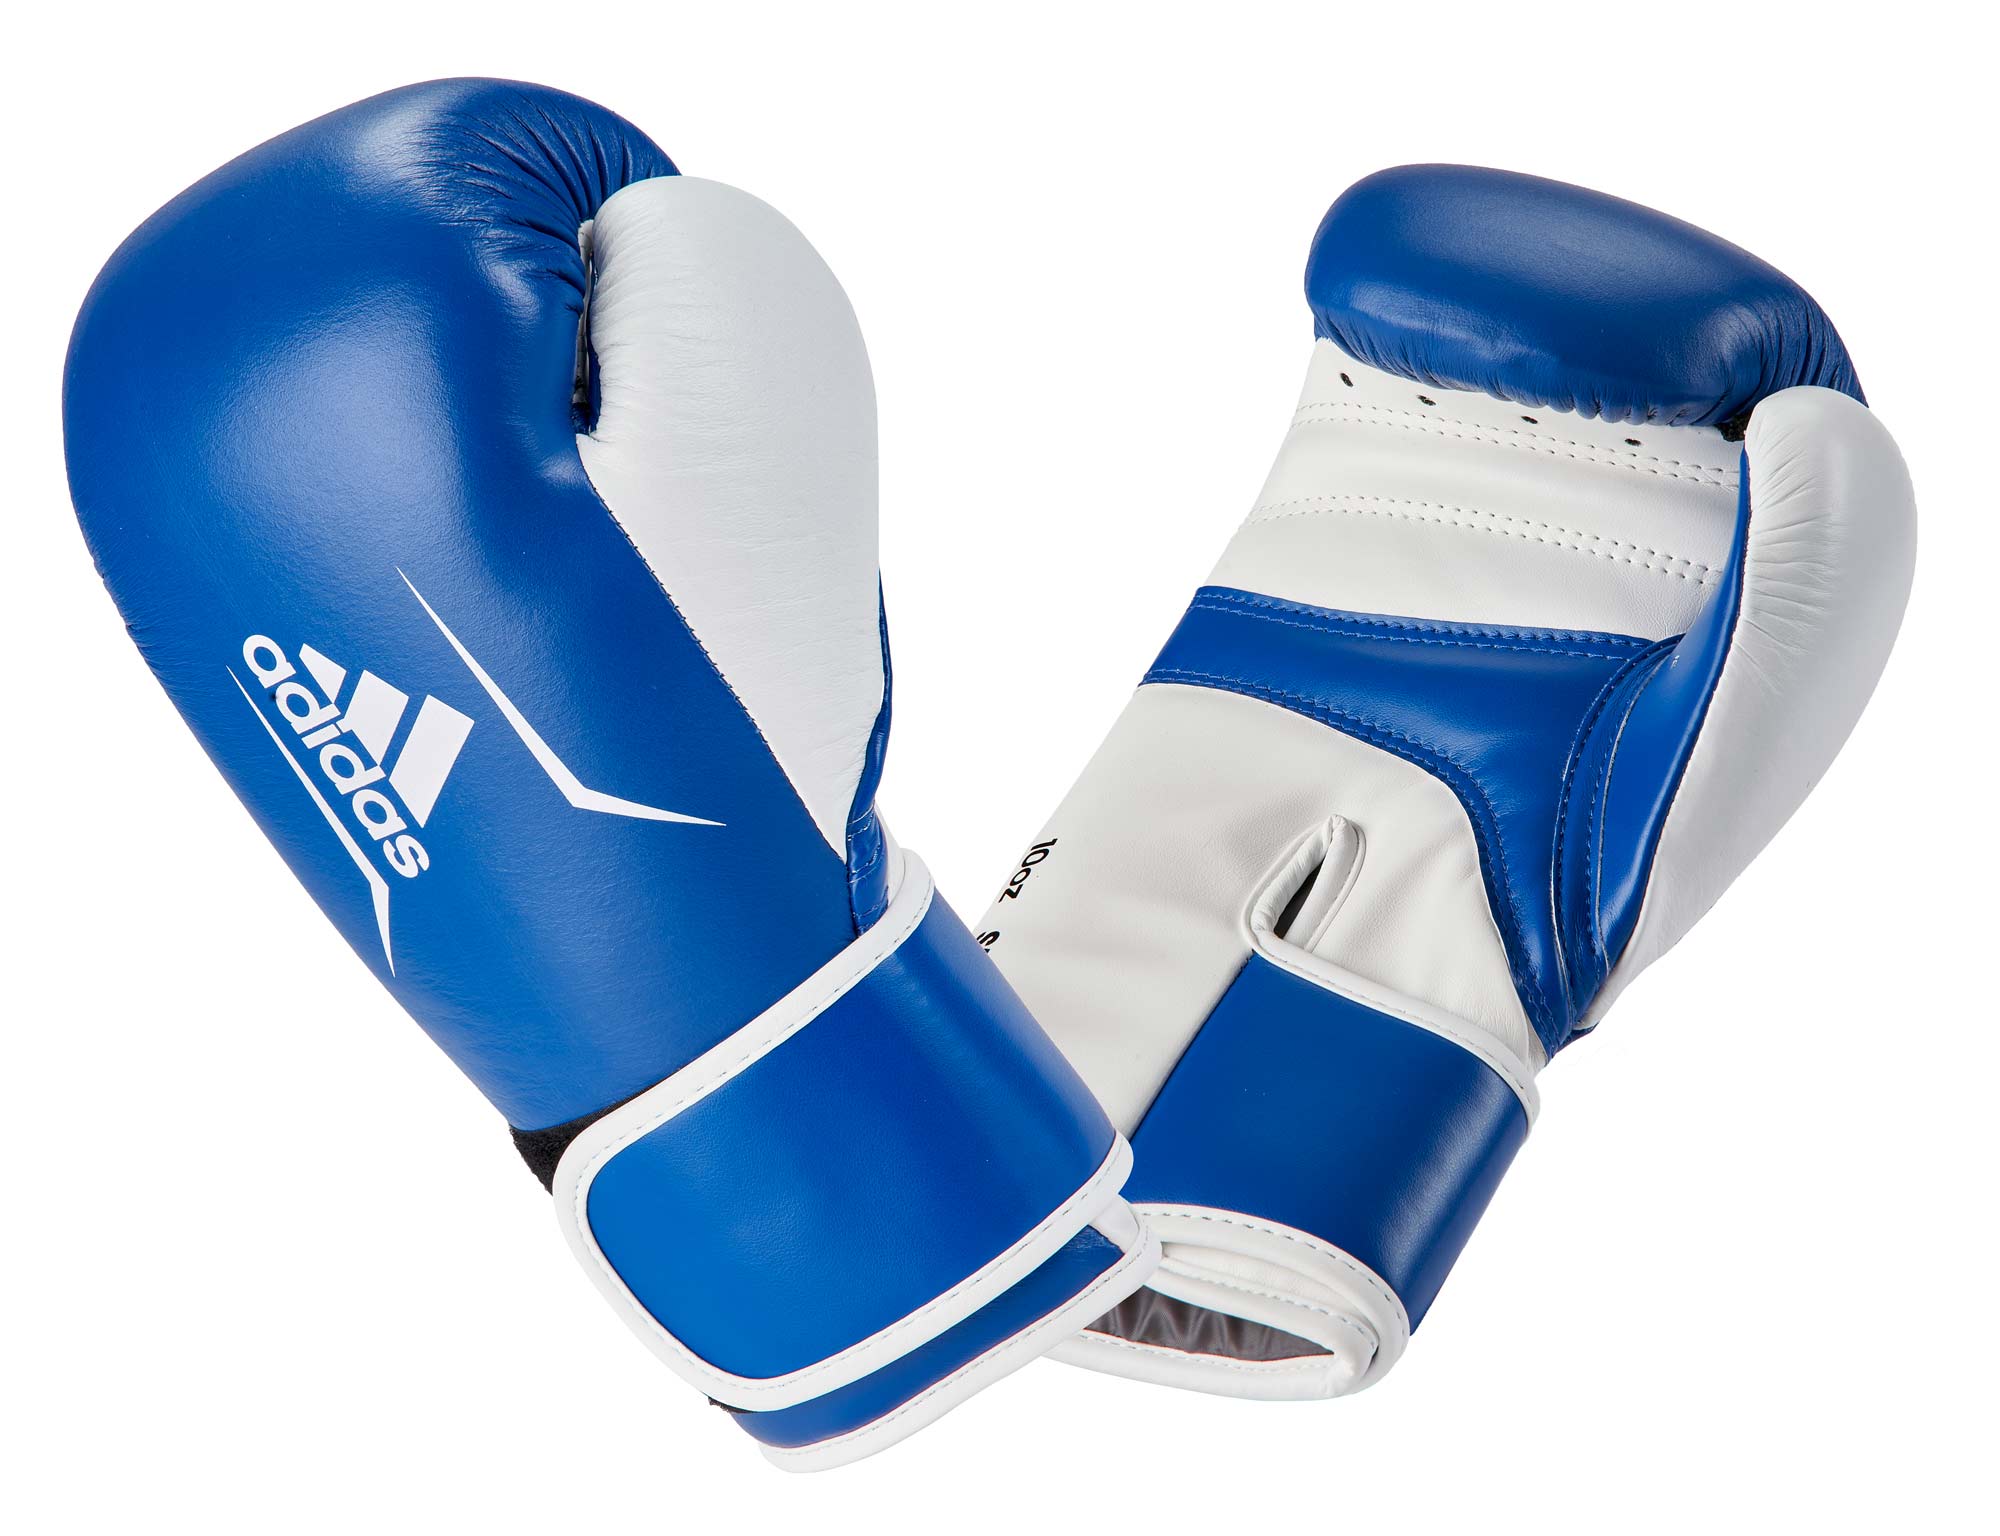 adidas competition glove Speed 165 adiSBG165, blue/white